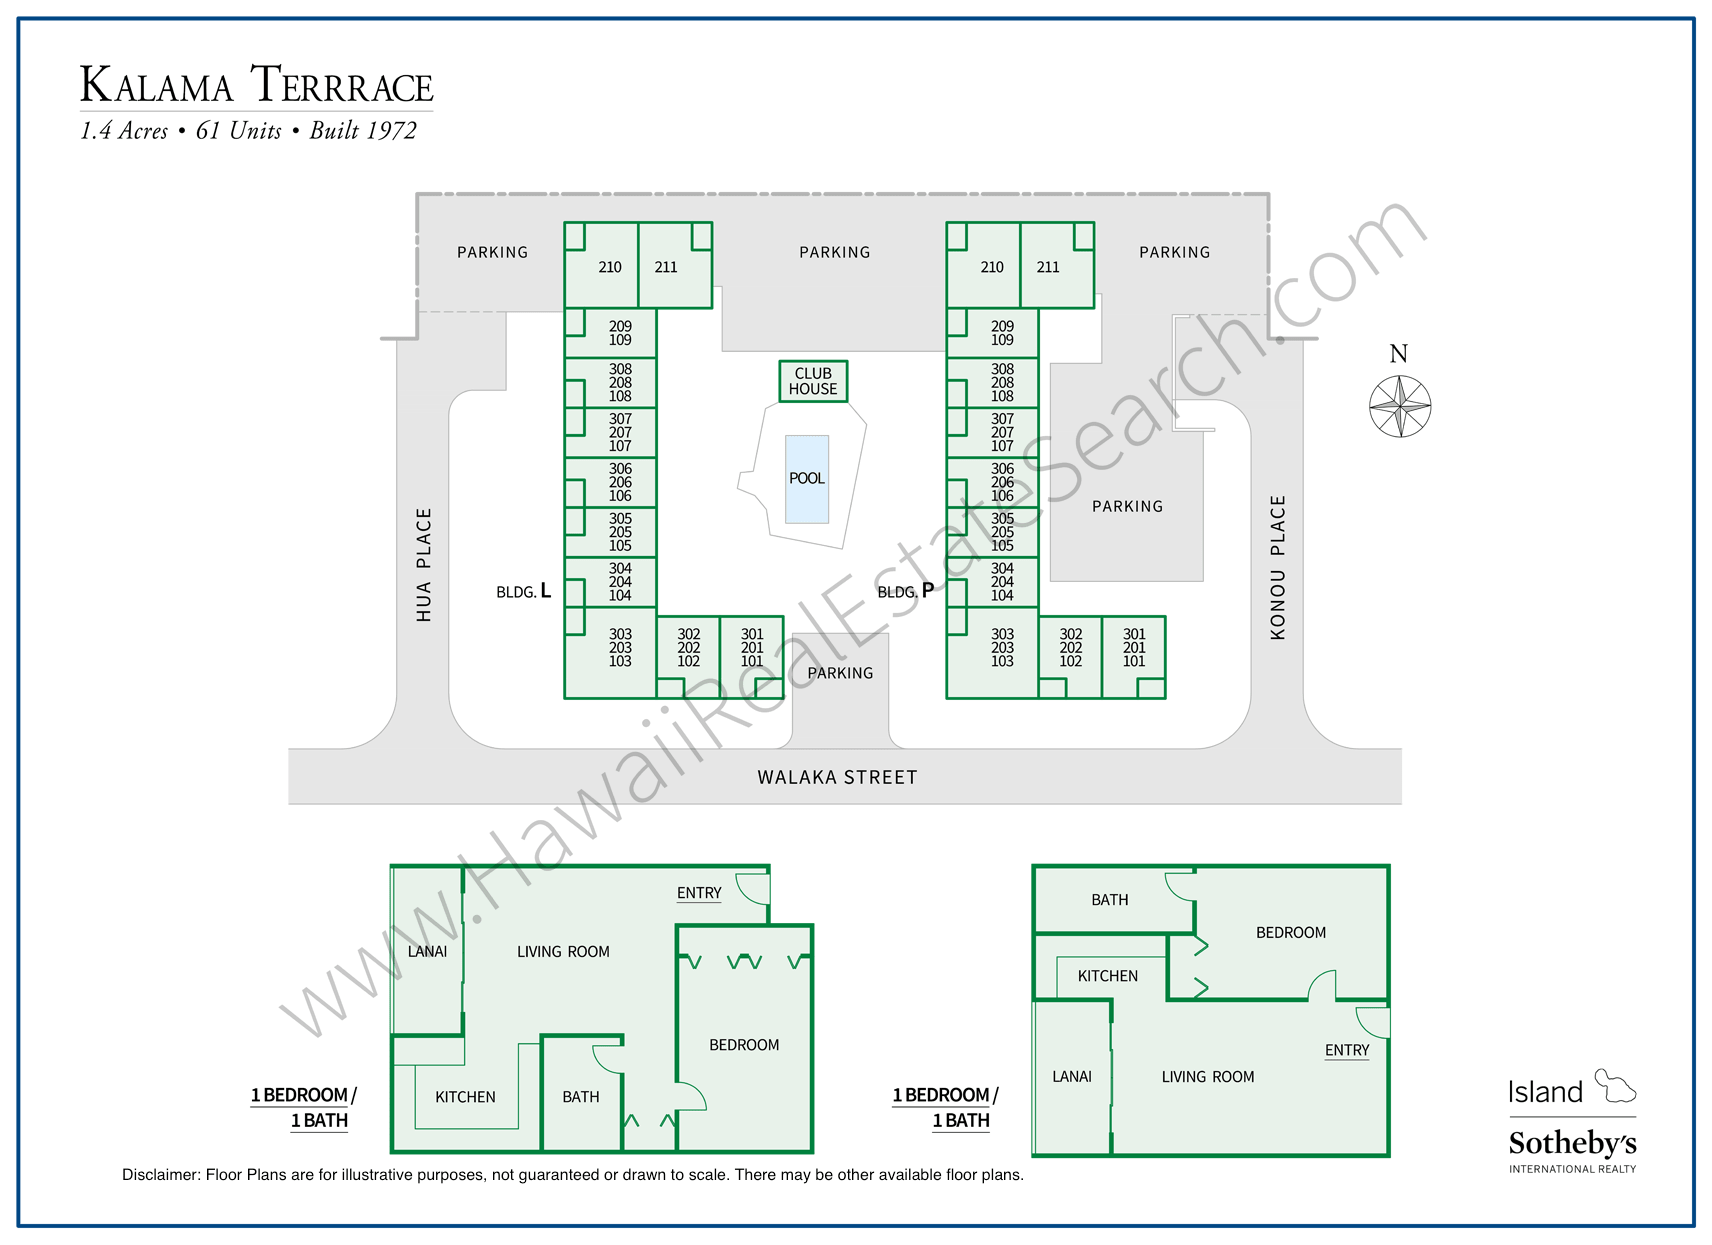 Kalama Terrace Map and Floor Plans